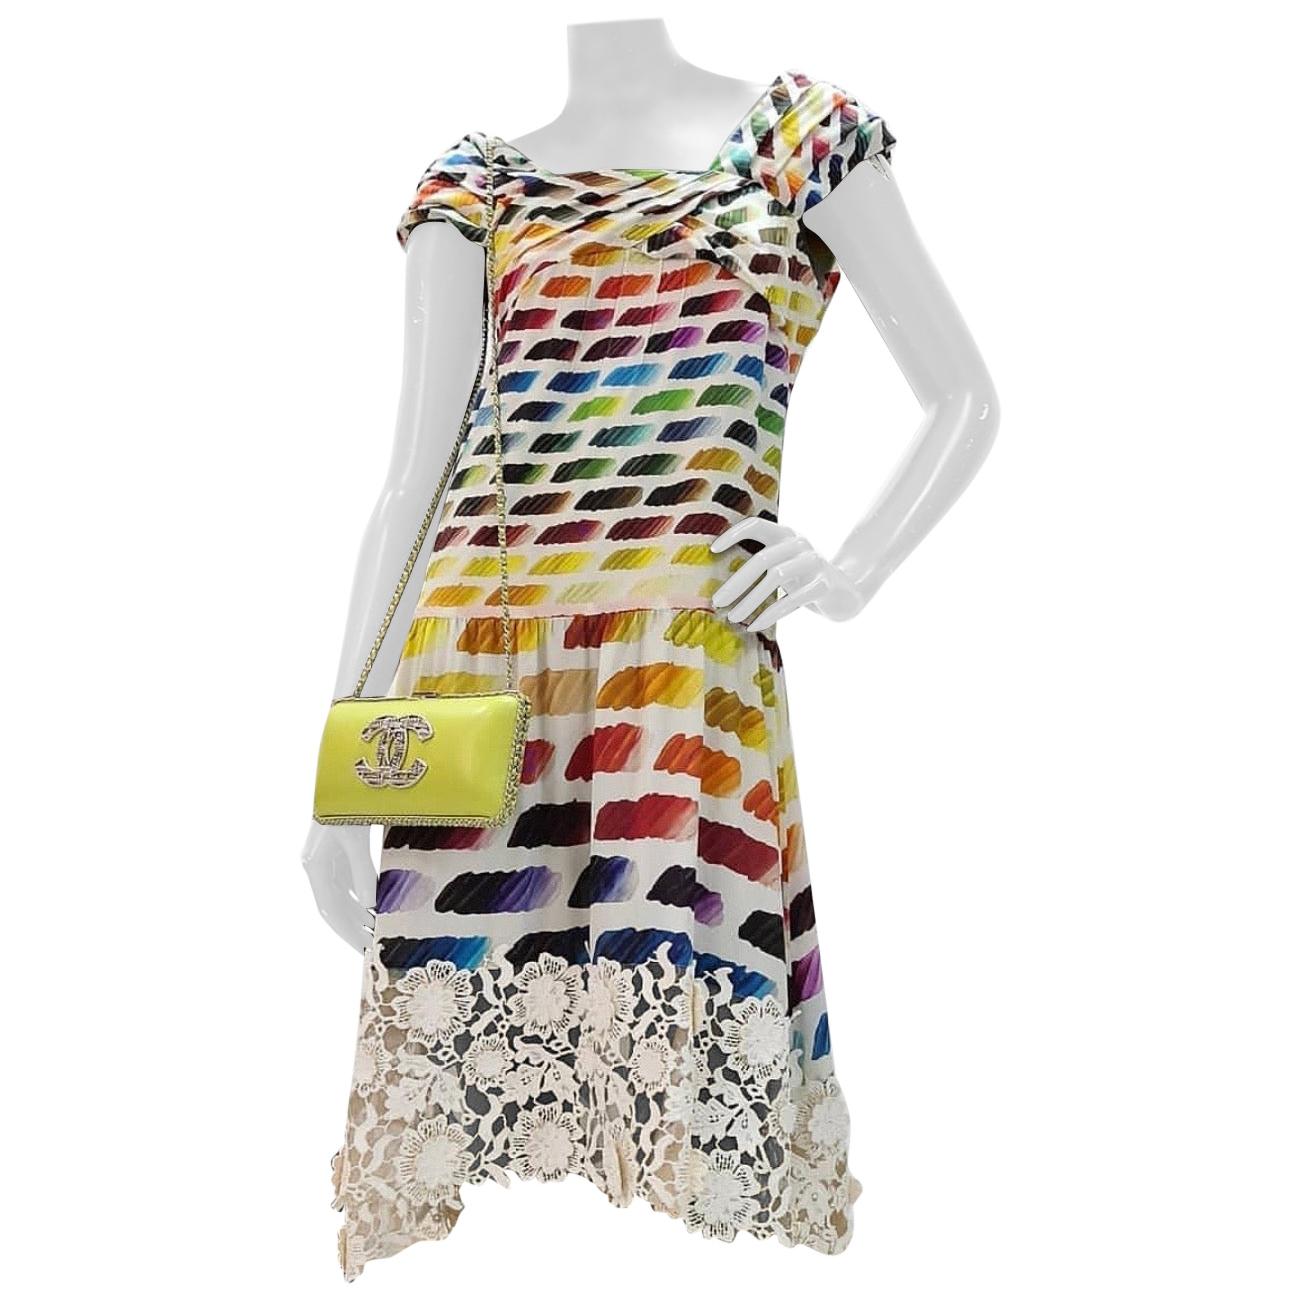 Chanel Lace Rainbow S/S 2014 Dress 